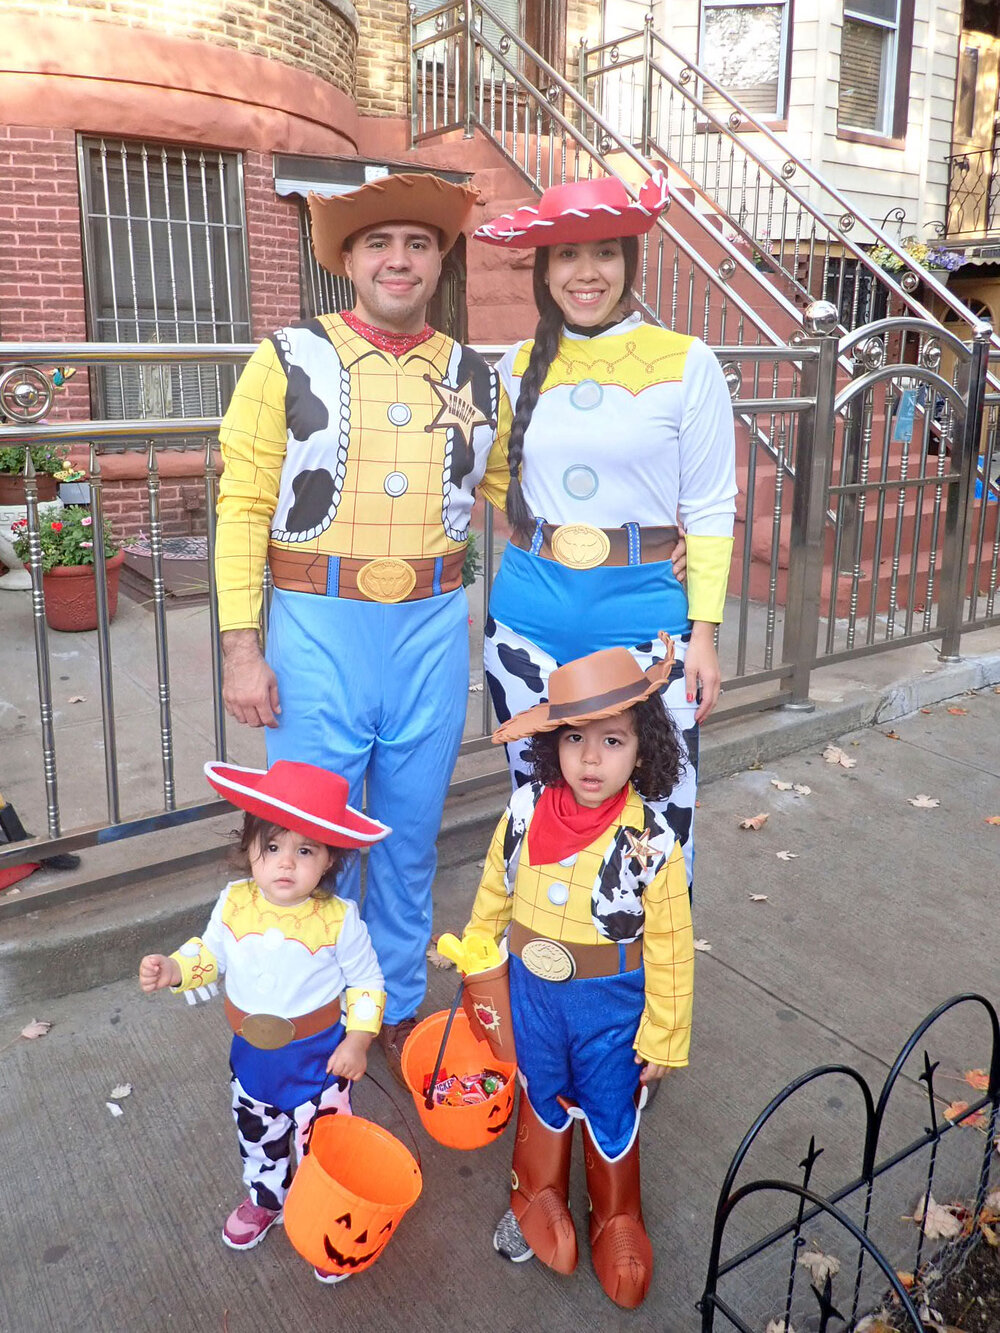 Toy story Woody and Jessie fancy dress costume idea